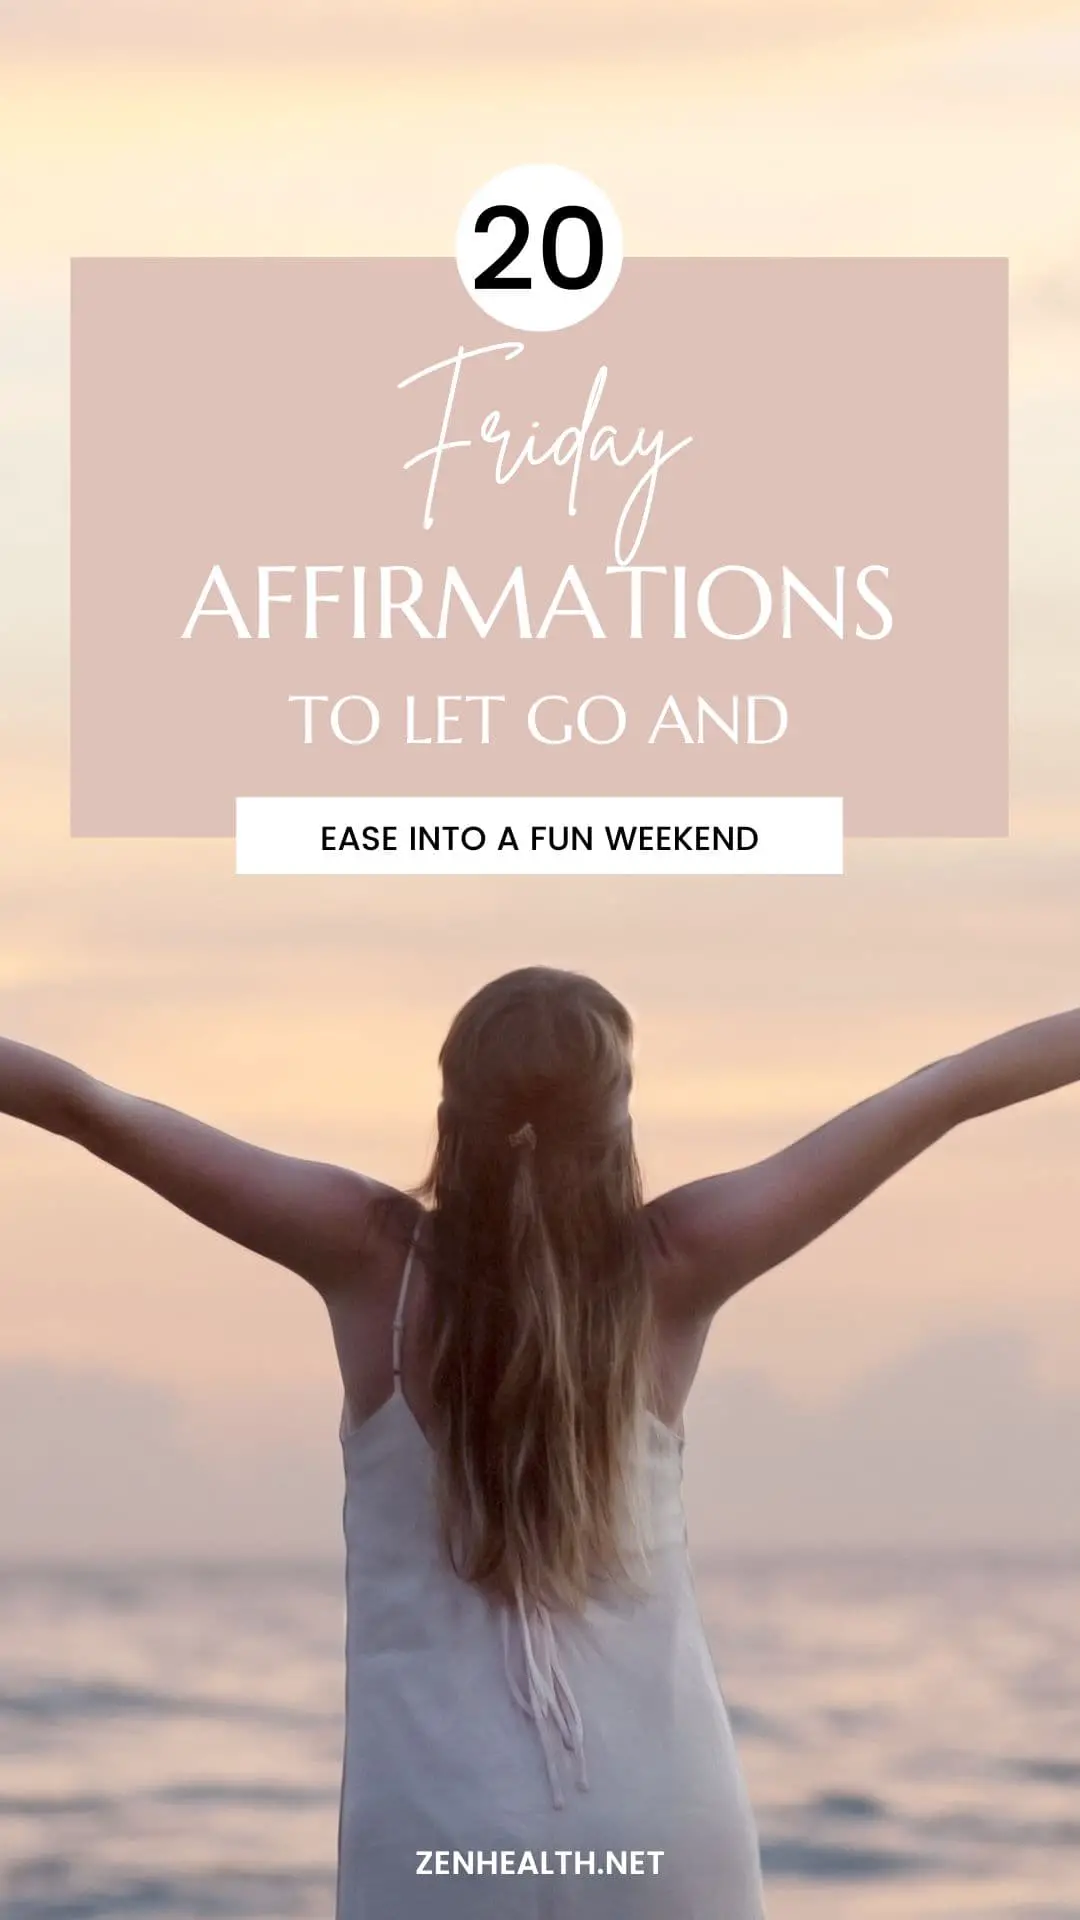 20 friday affirmations